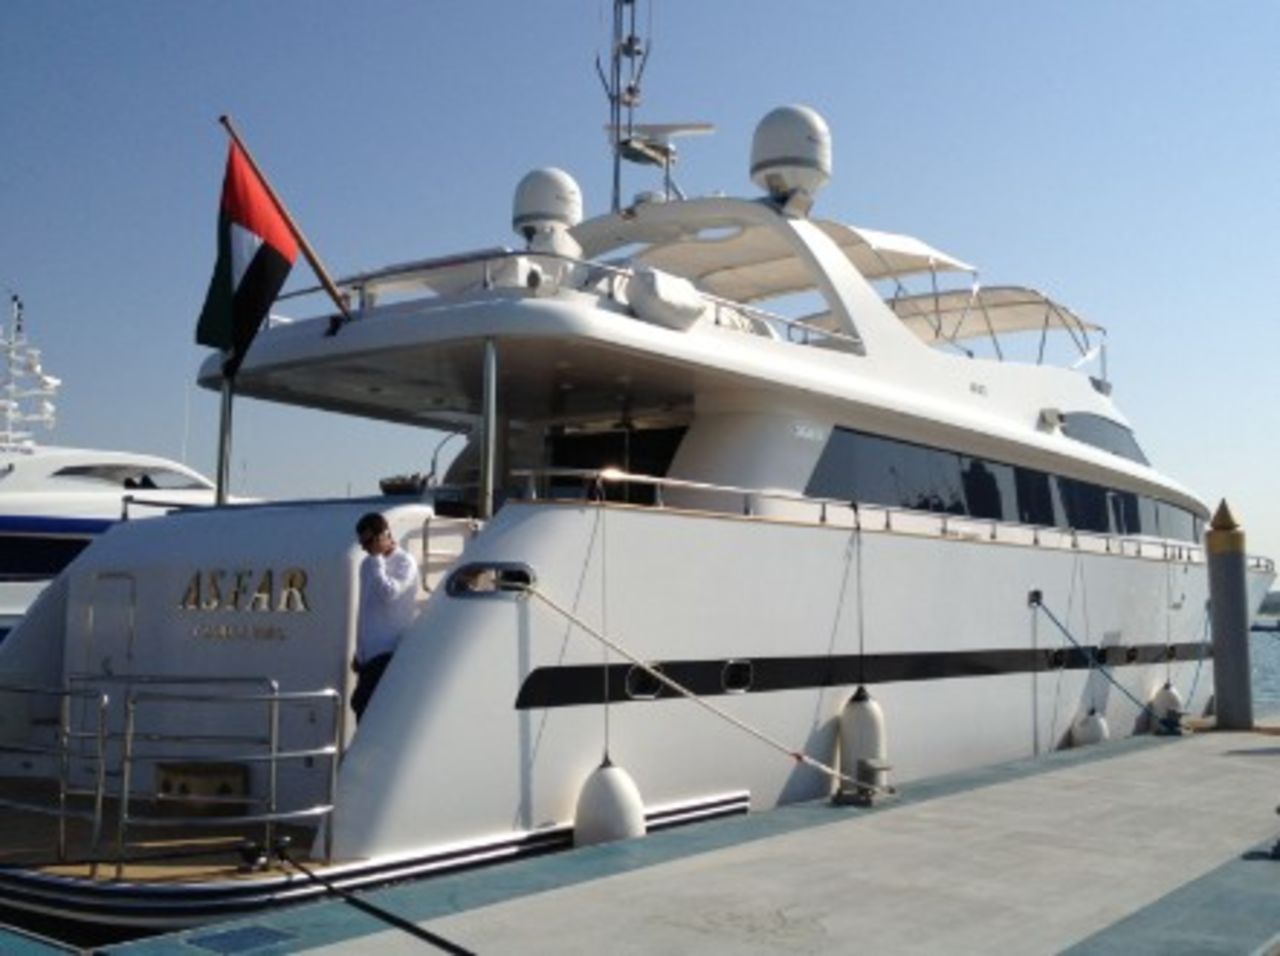 The superyacht Asfar, used by Beyonce. - (Belevari Marine)